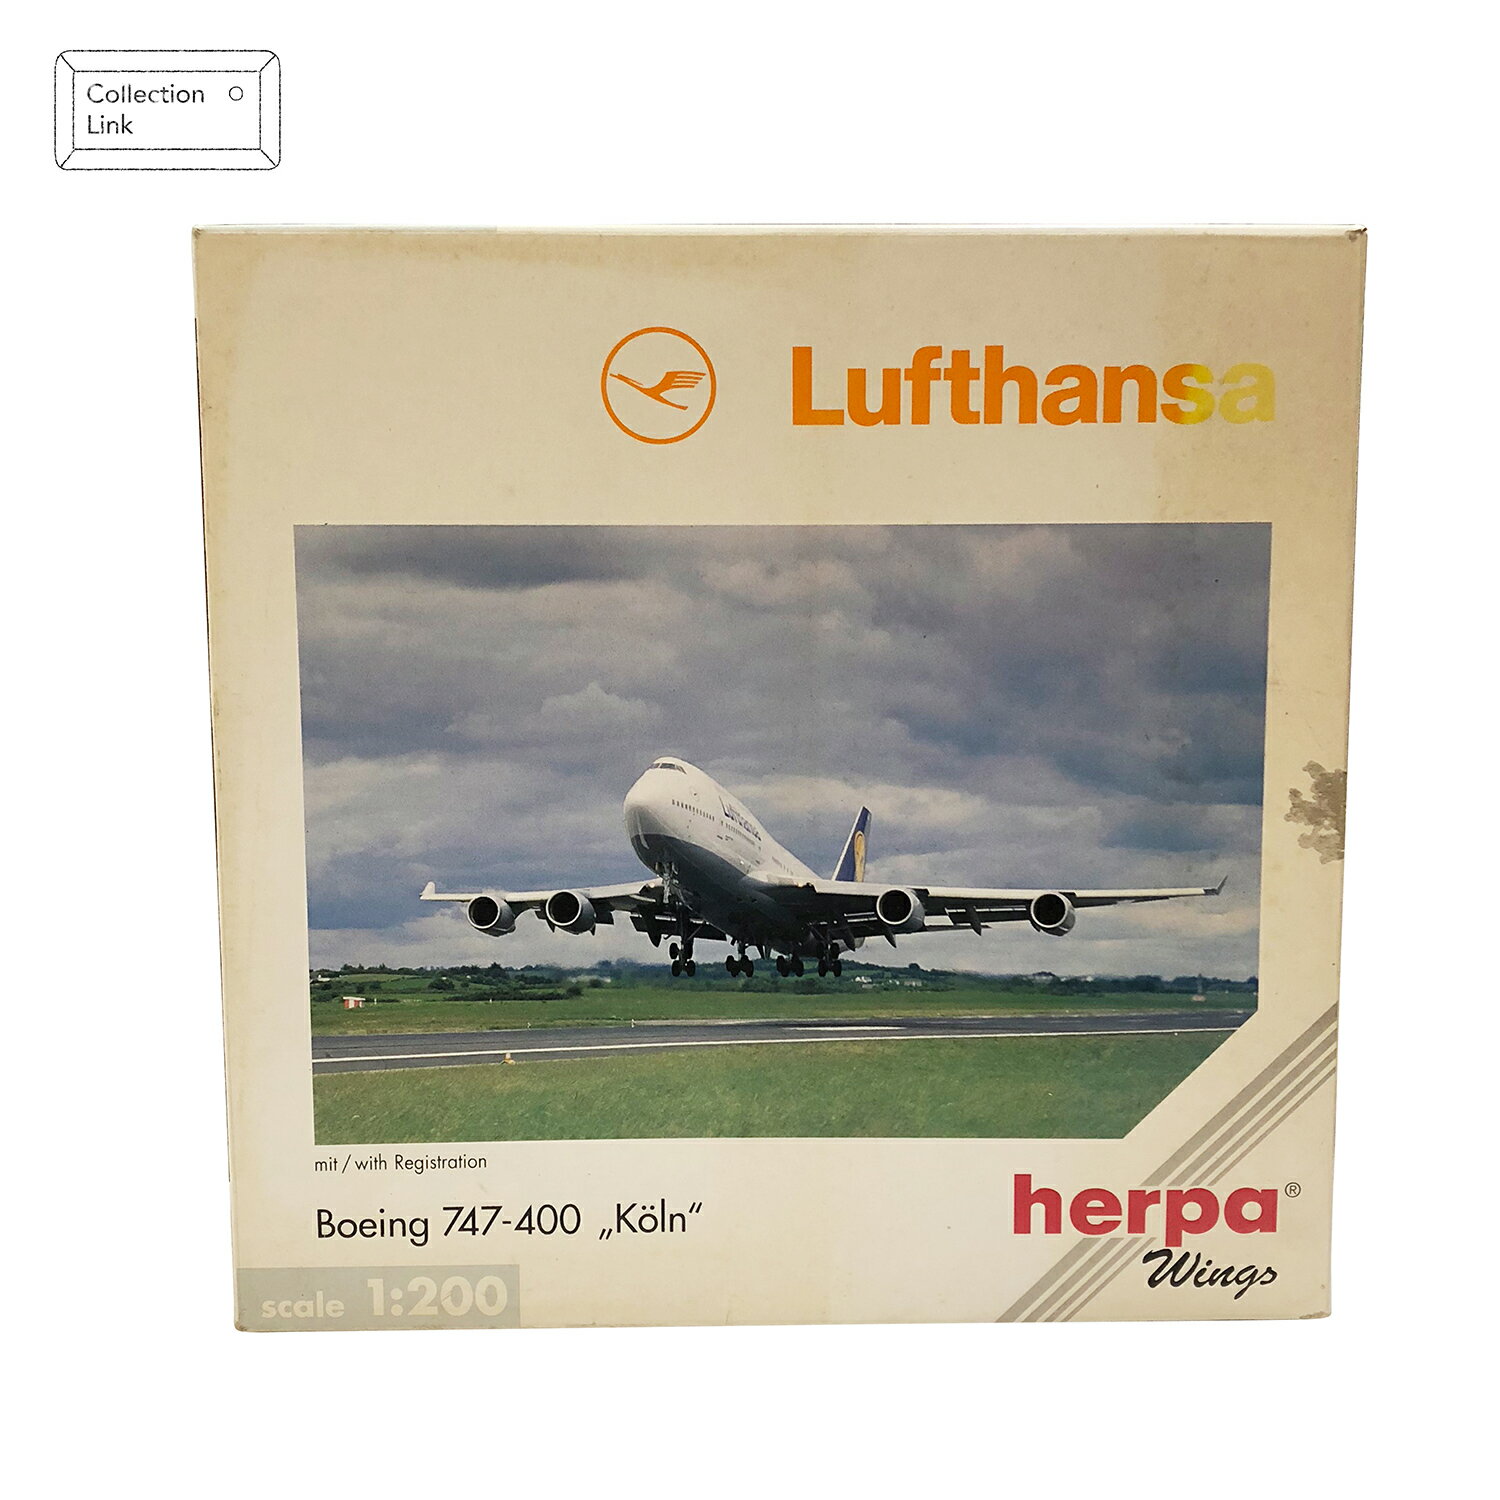 HERPA 1:200 Boeing 747-400 “koln” 飛機模型【Tonbook蜻蜓書店】